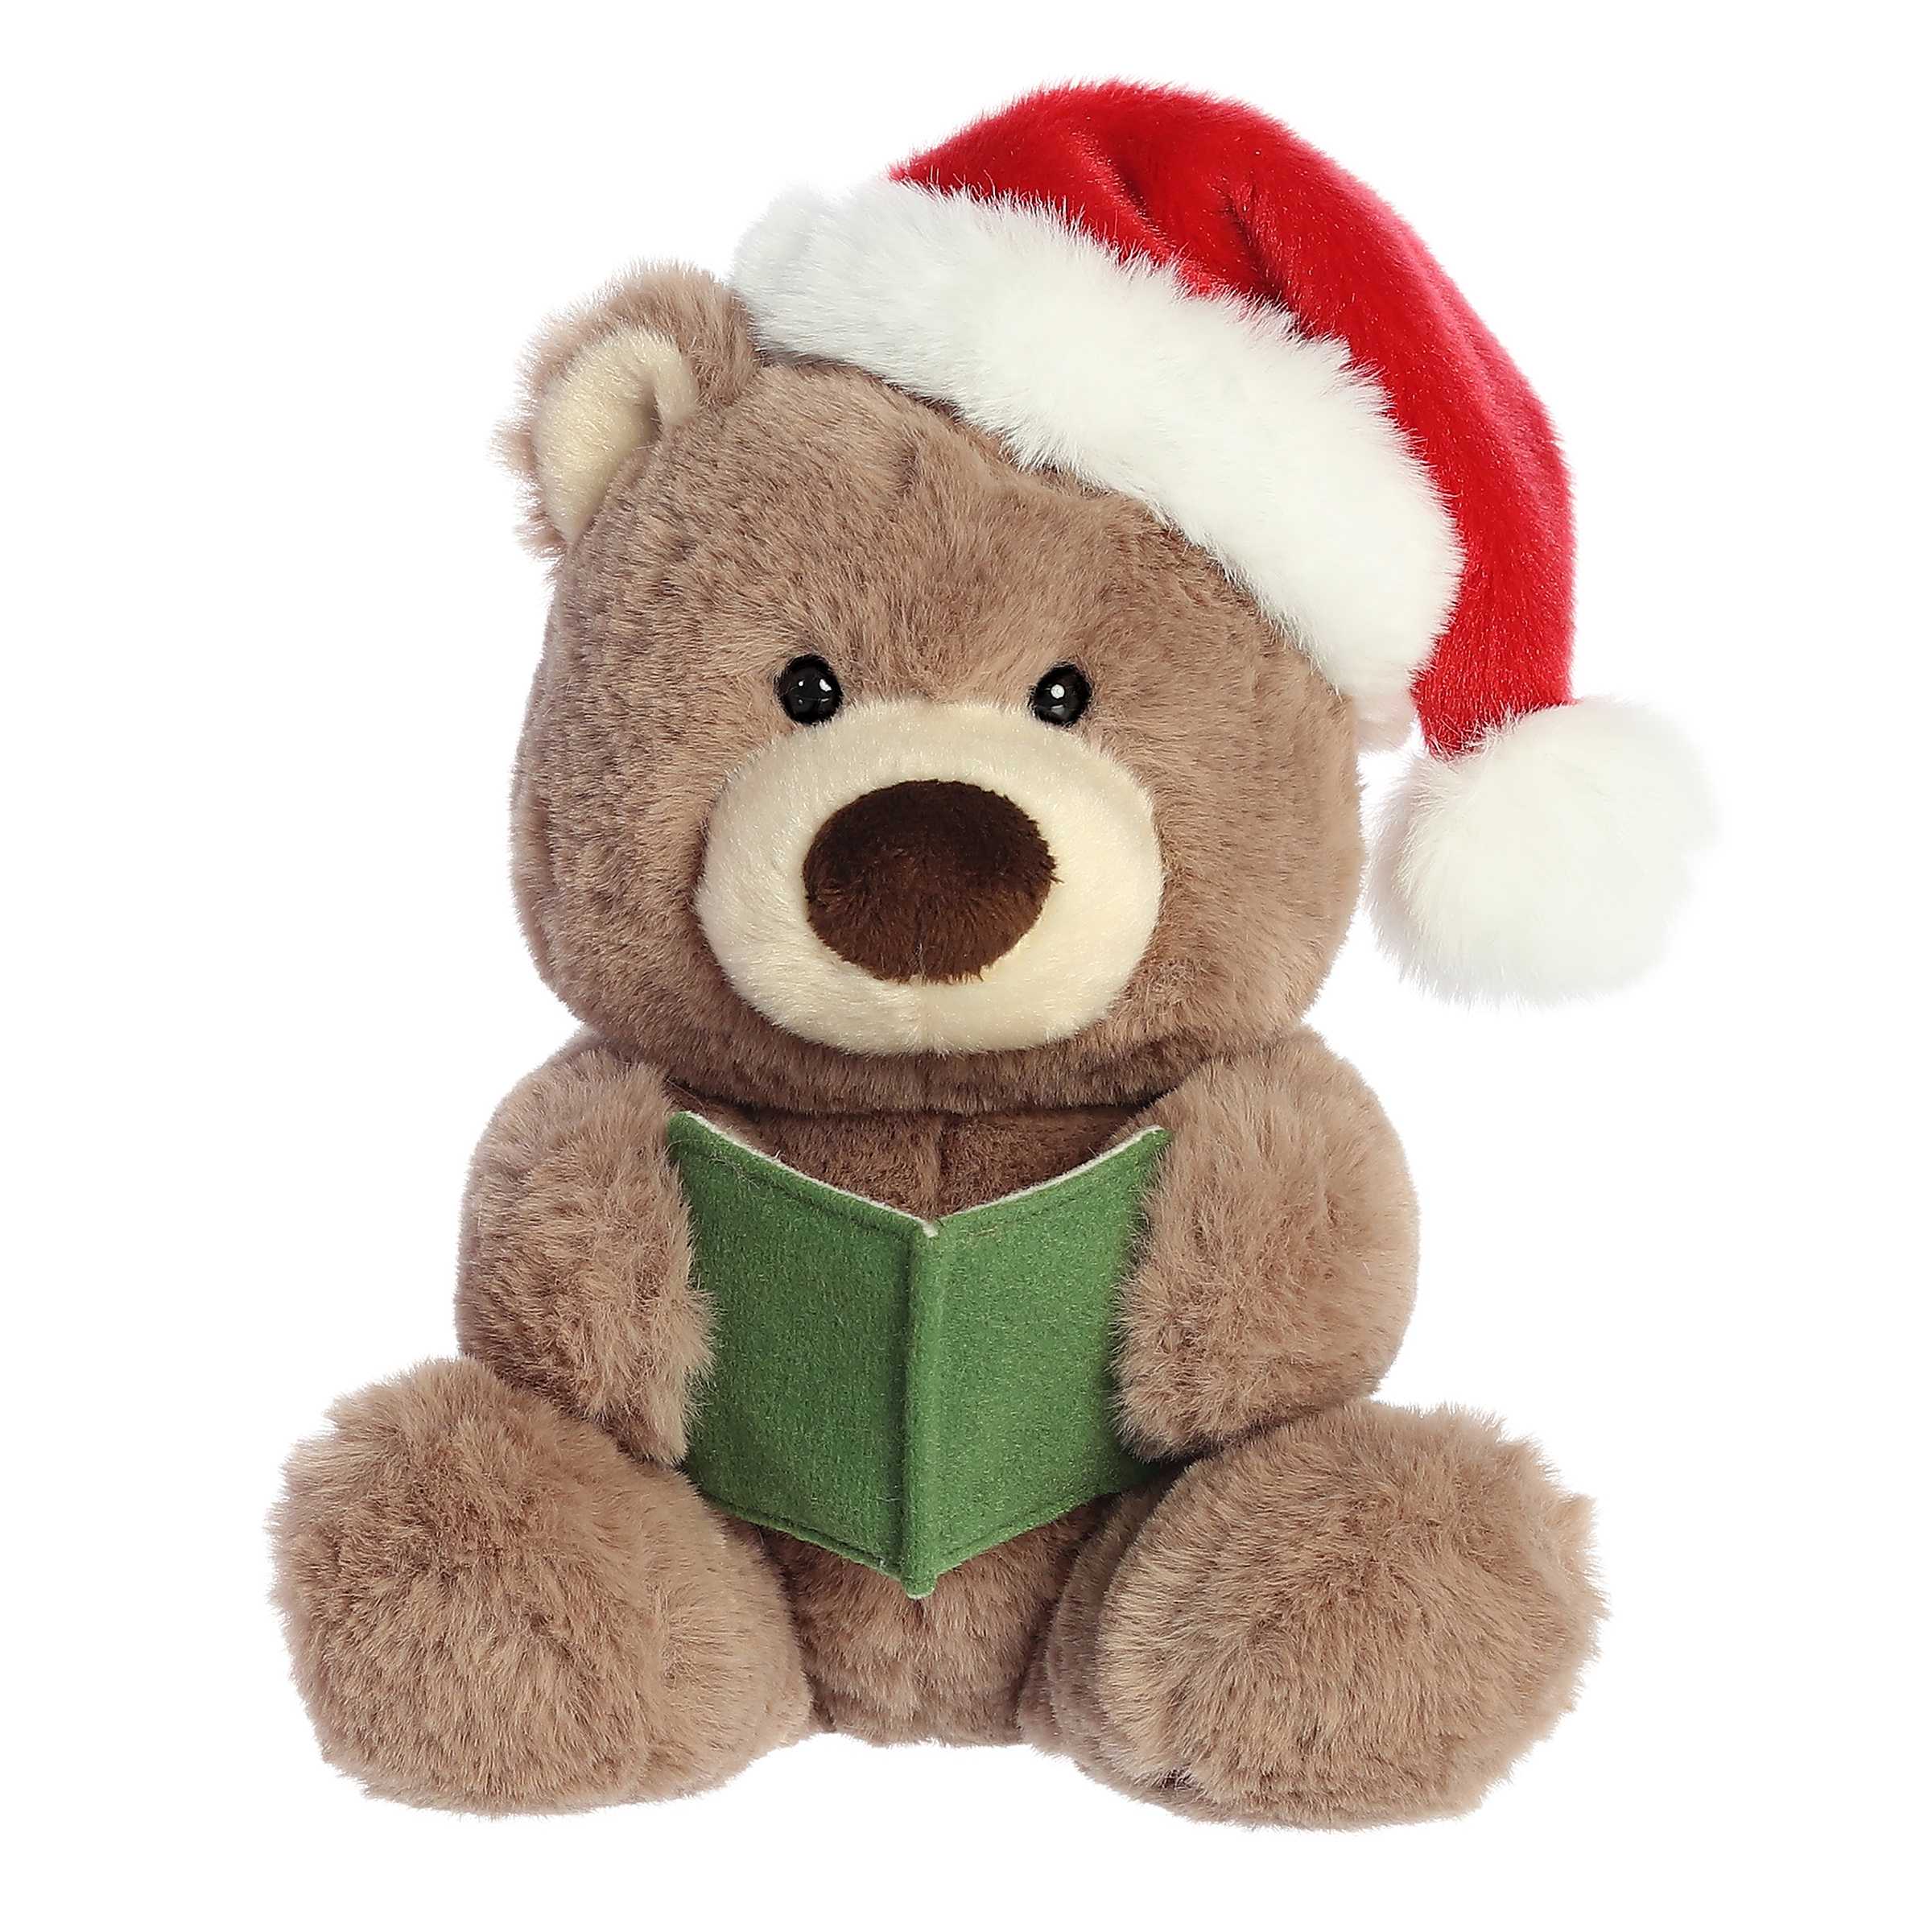 Adorable light brown teddy bear wearing a cute non-detachable Santa hat and holding a green non-detachable songbook